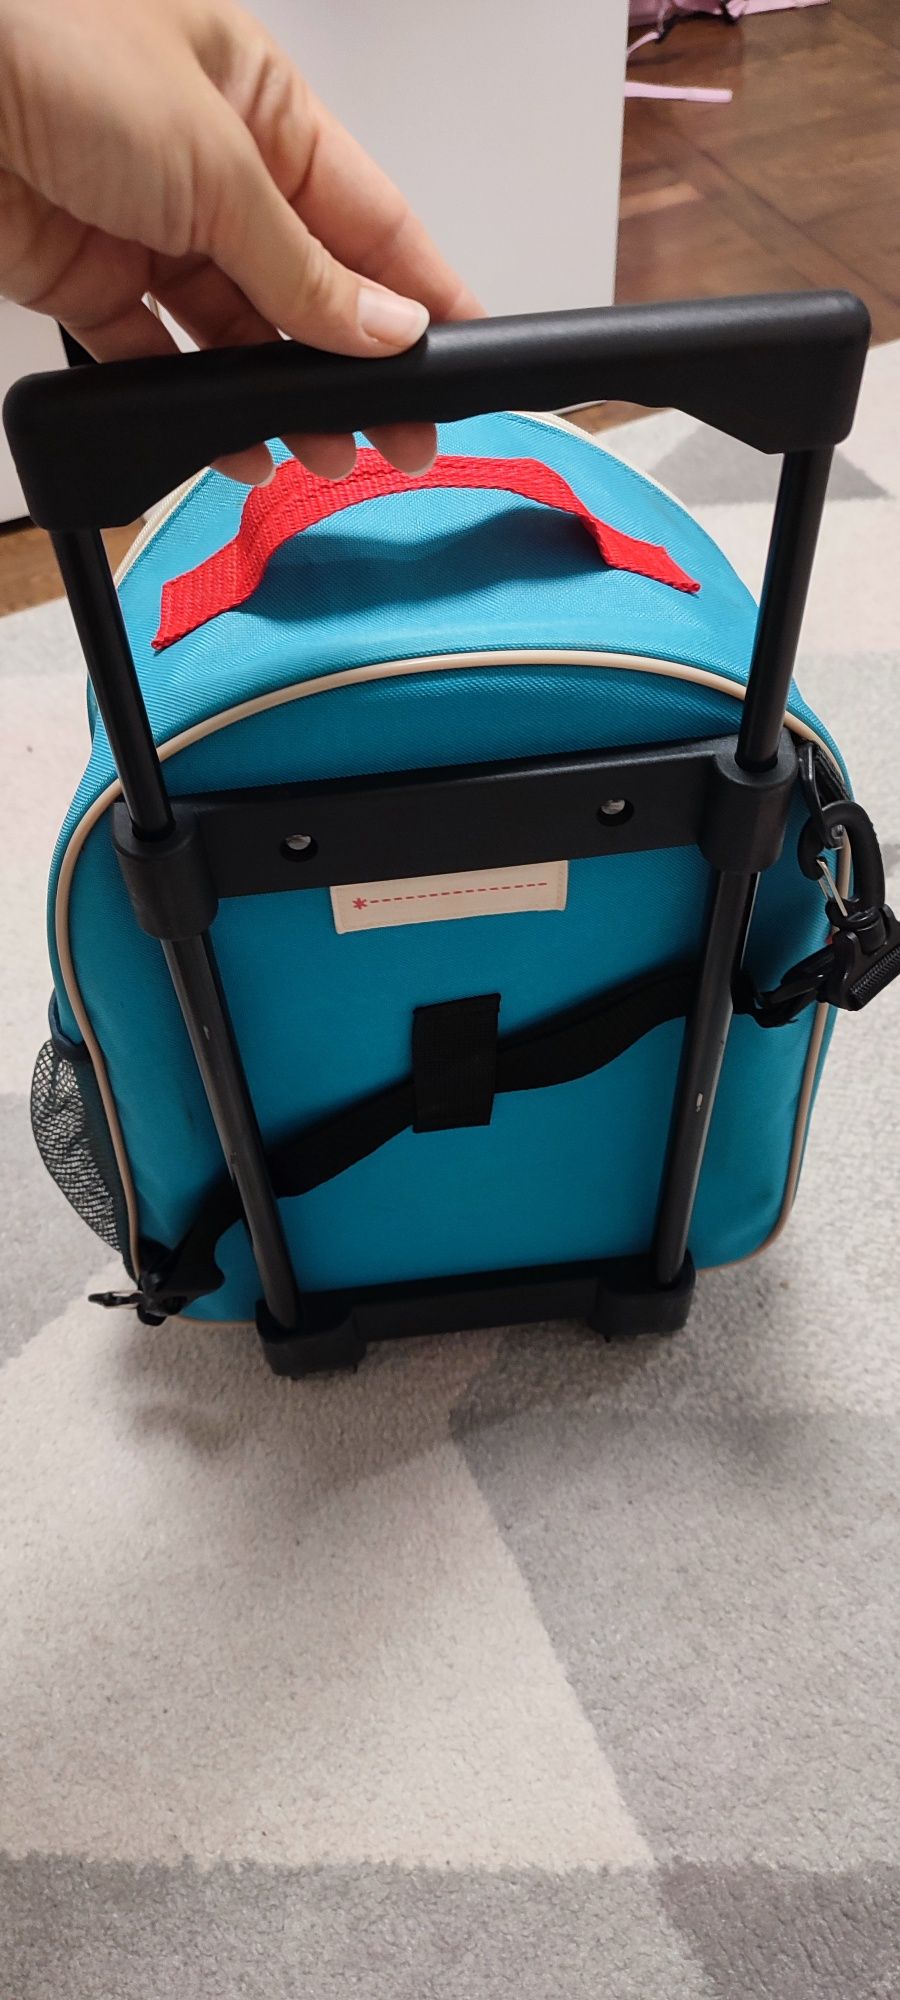 Детский чемодан на колесиках skip hop сова